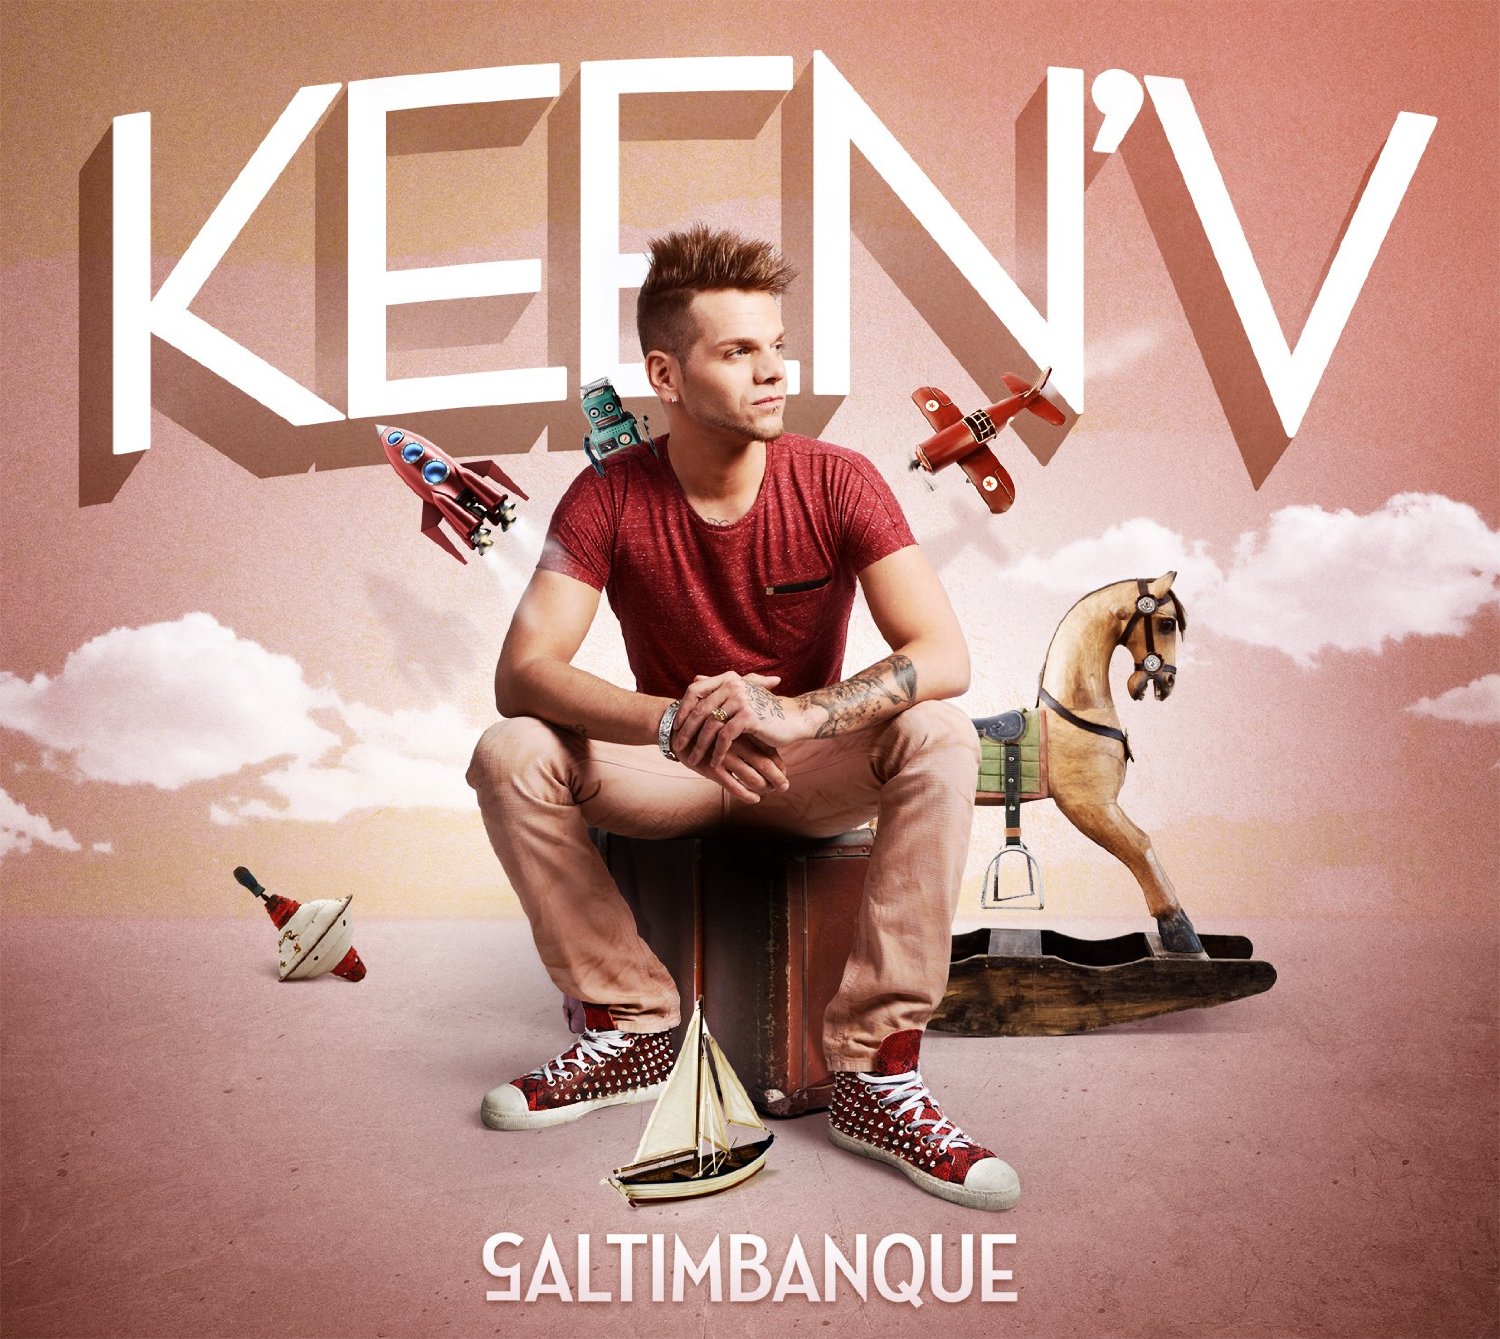  Keen' V - Saltimbanque (2014) Keenv_saltimbanque